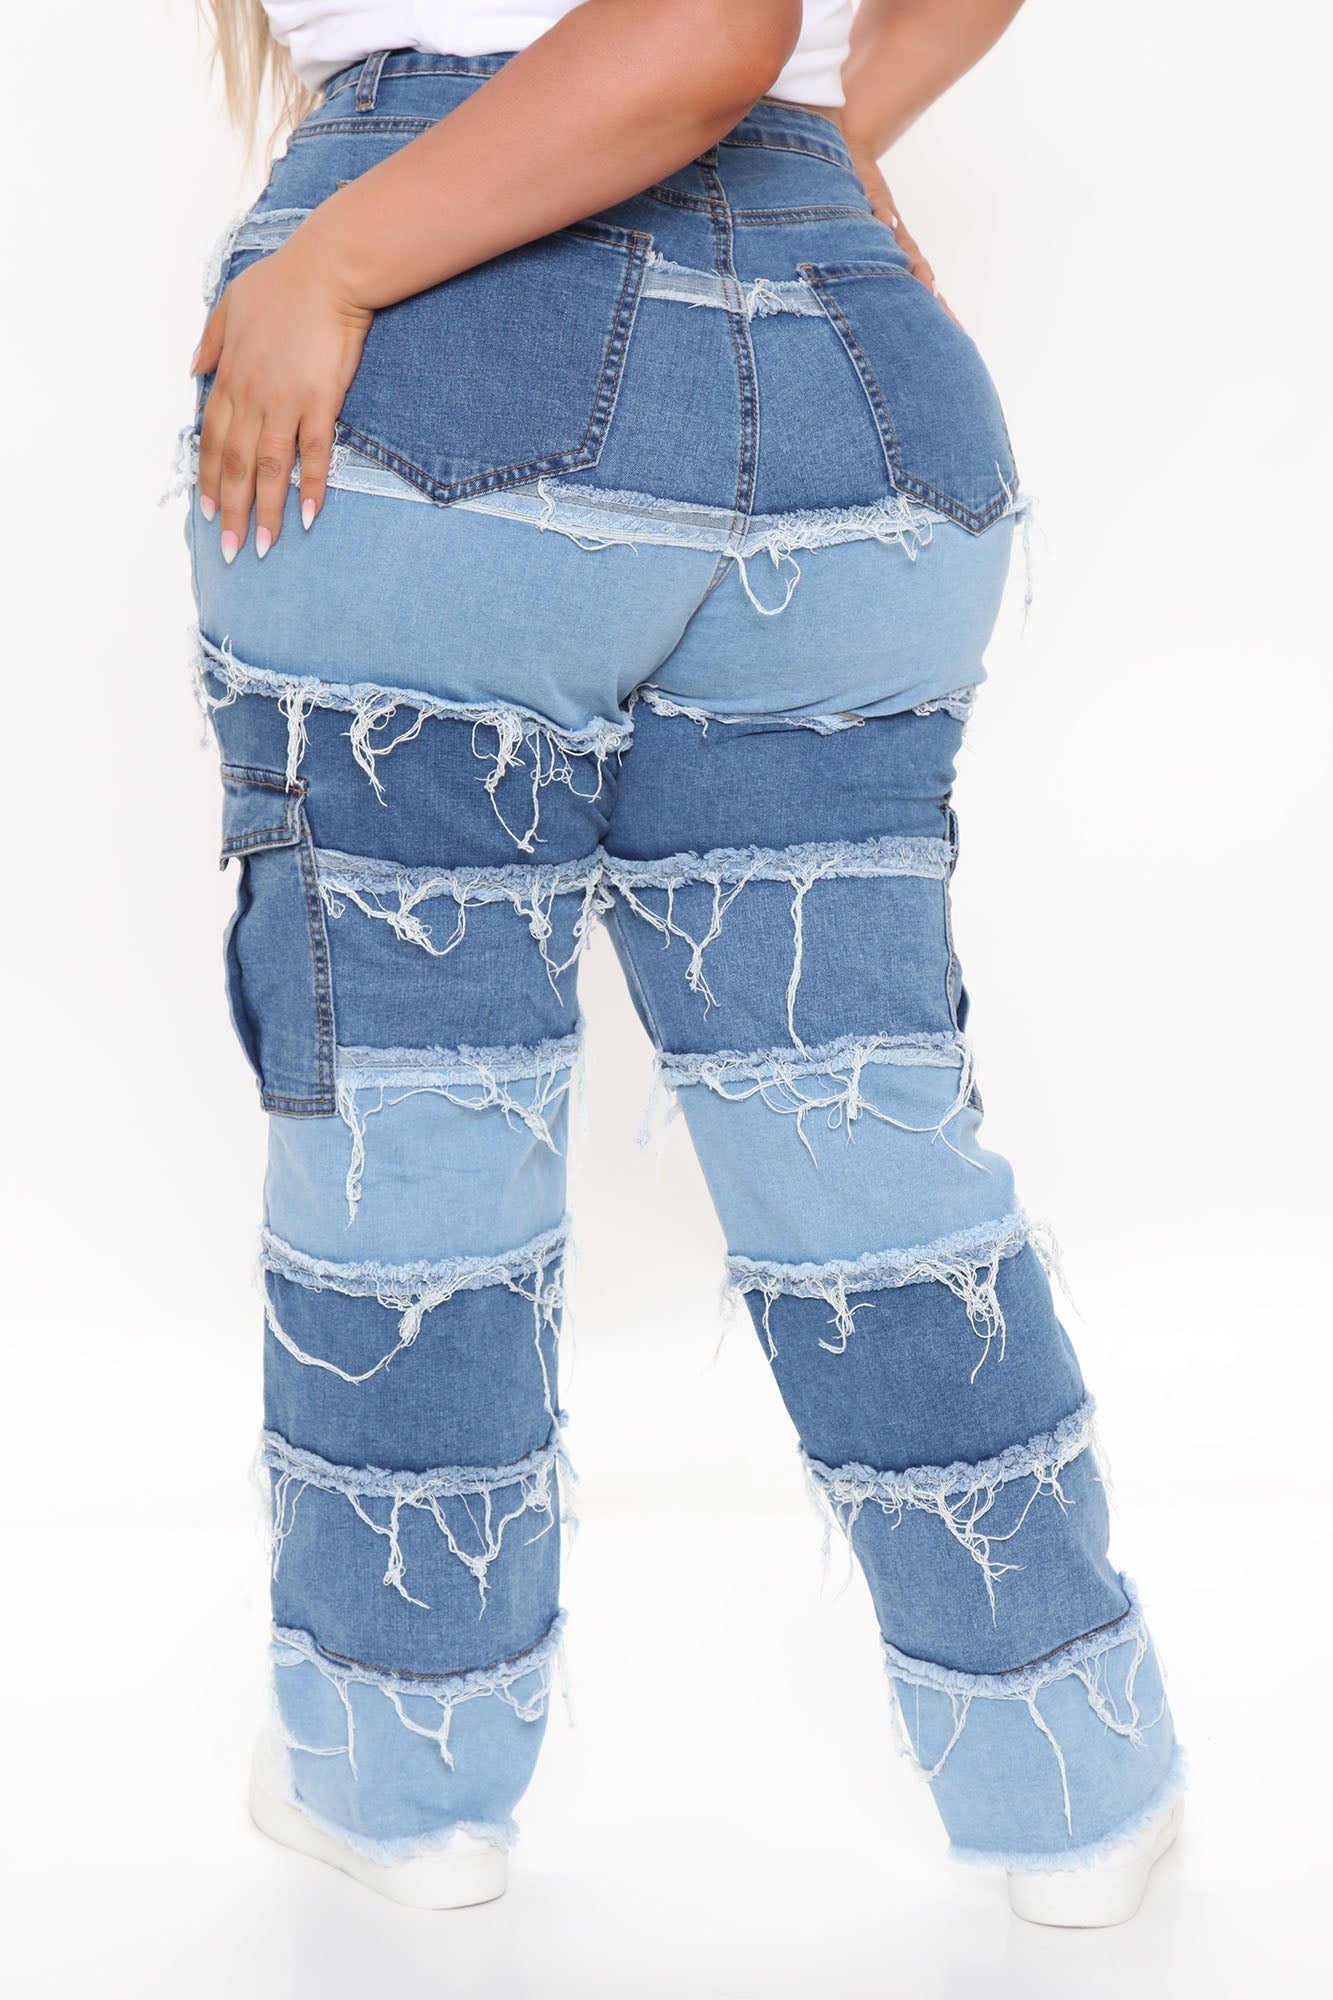 Pacific Coast Patchwork Utility Jeans - Blue Sai Feel